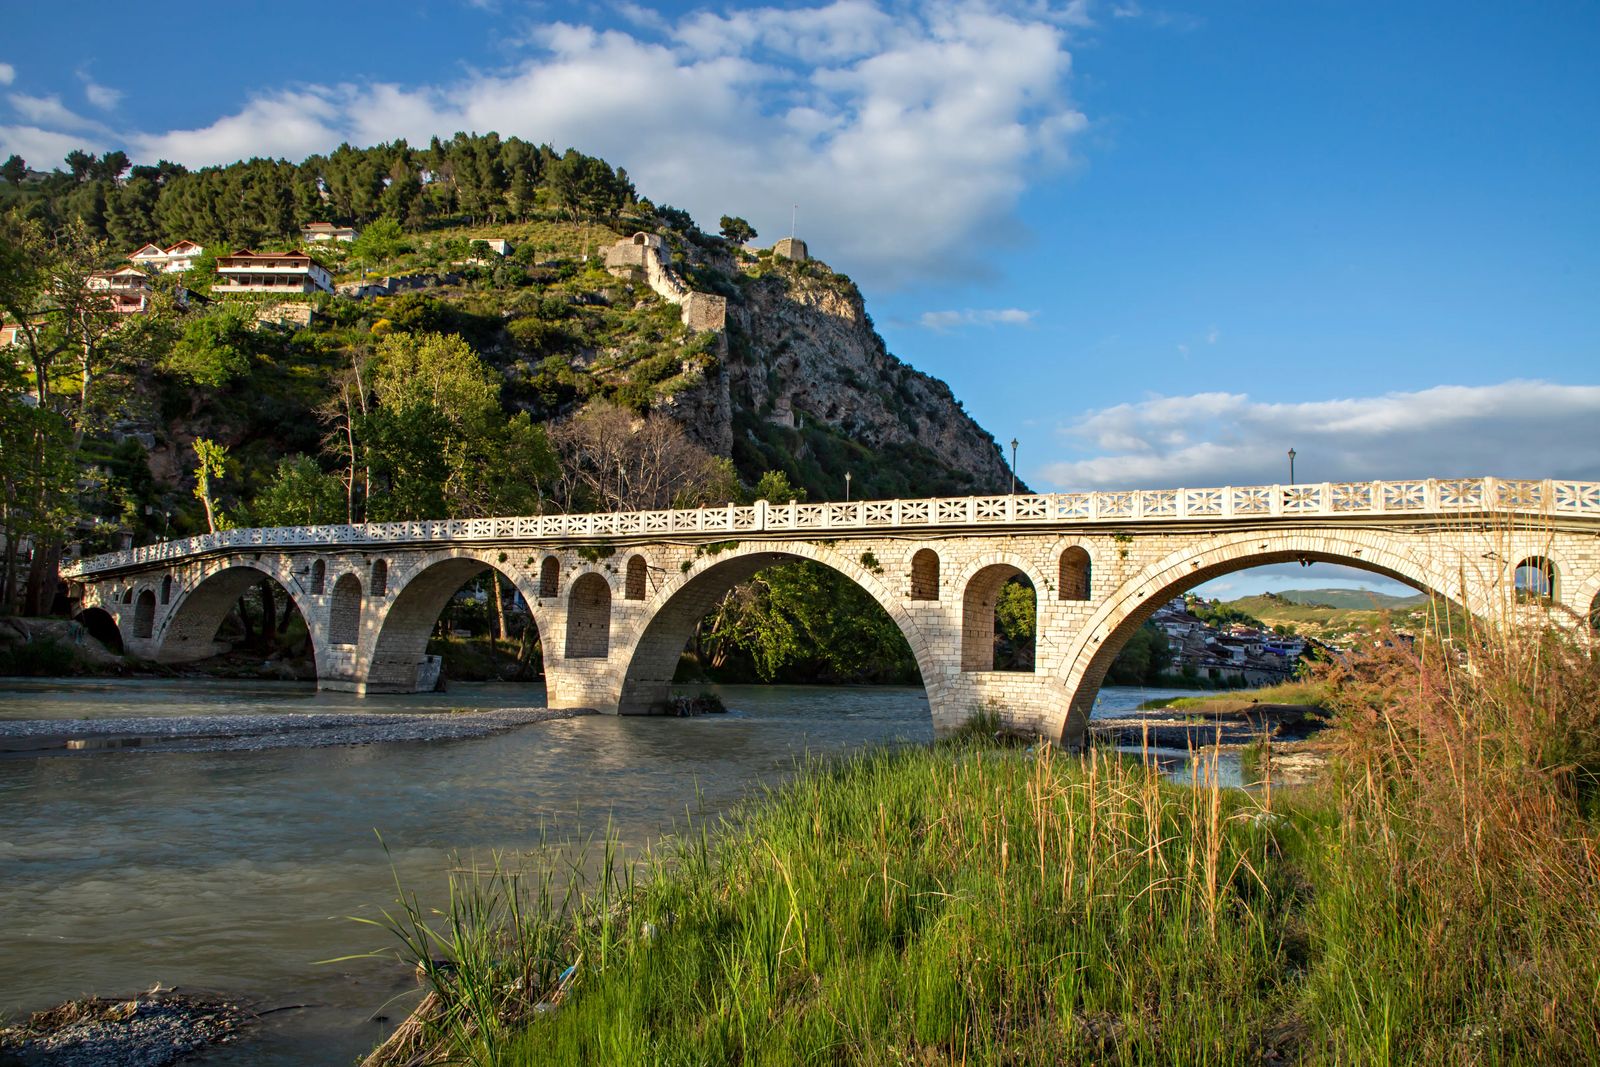 Gorica Bridge - Things to see in berat Albania in one day